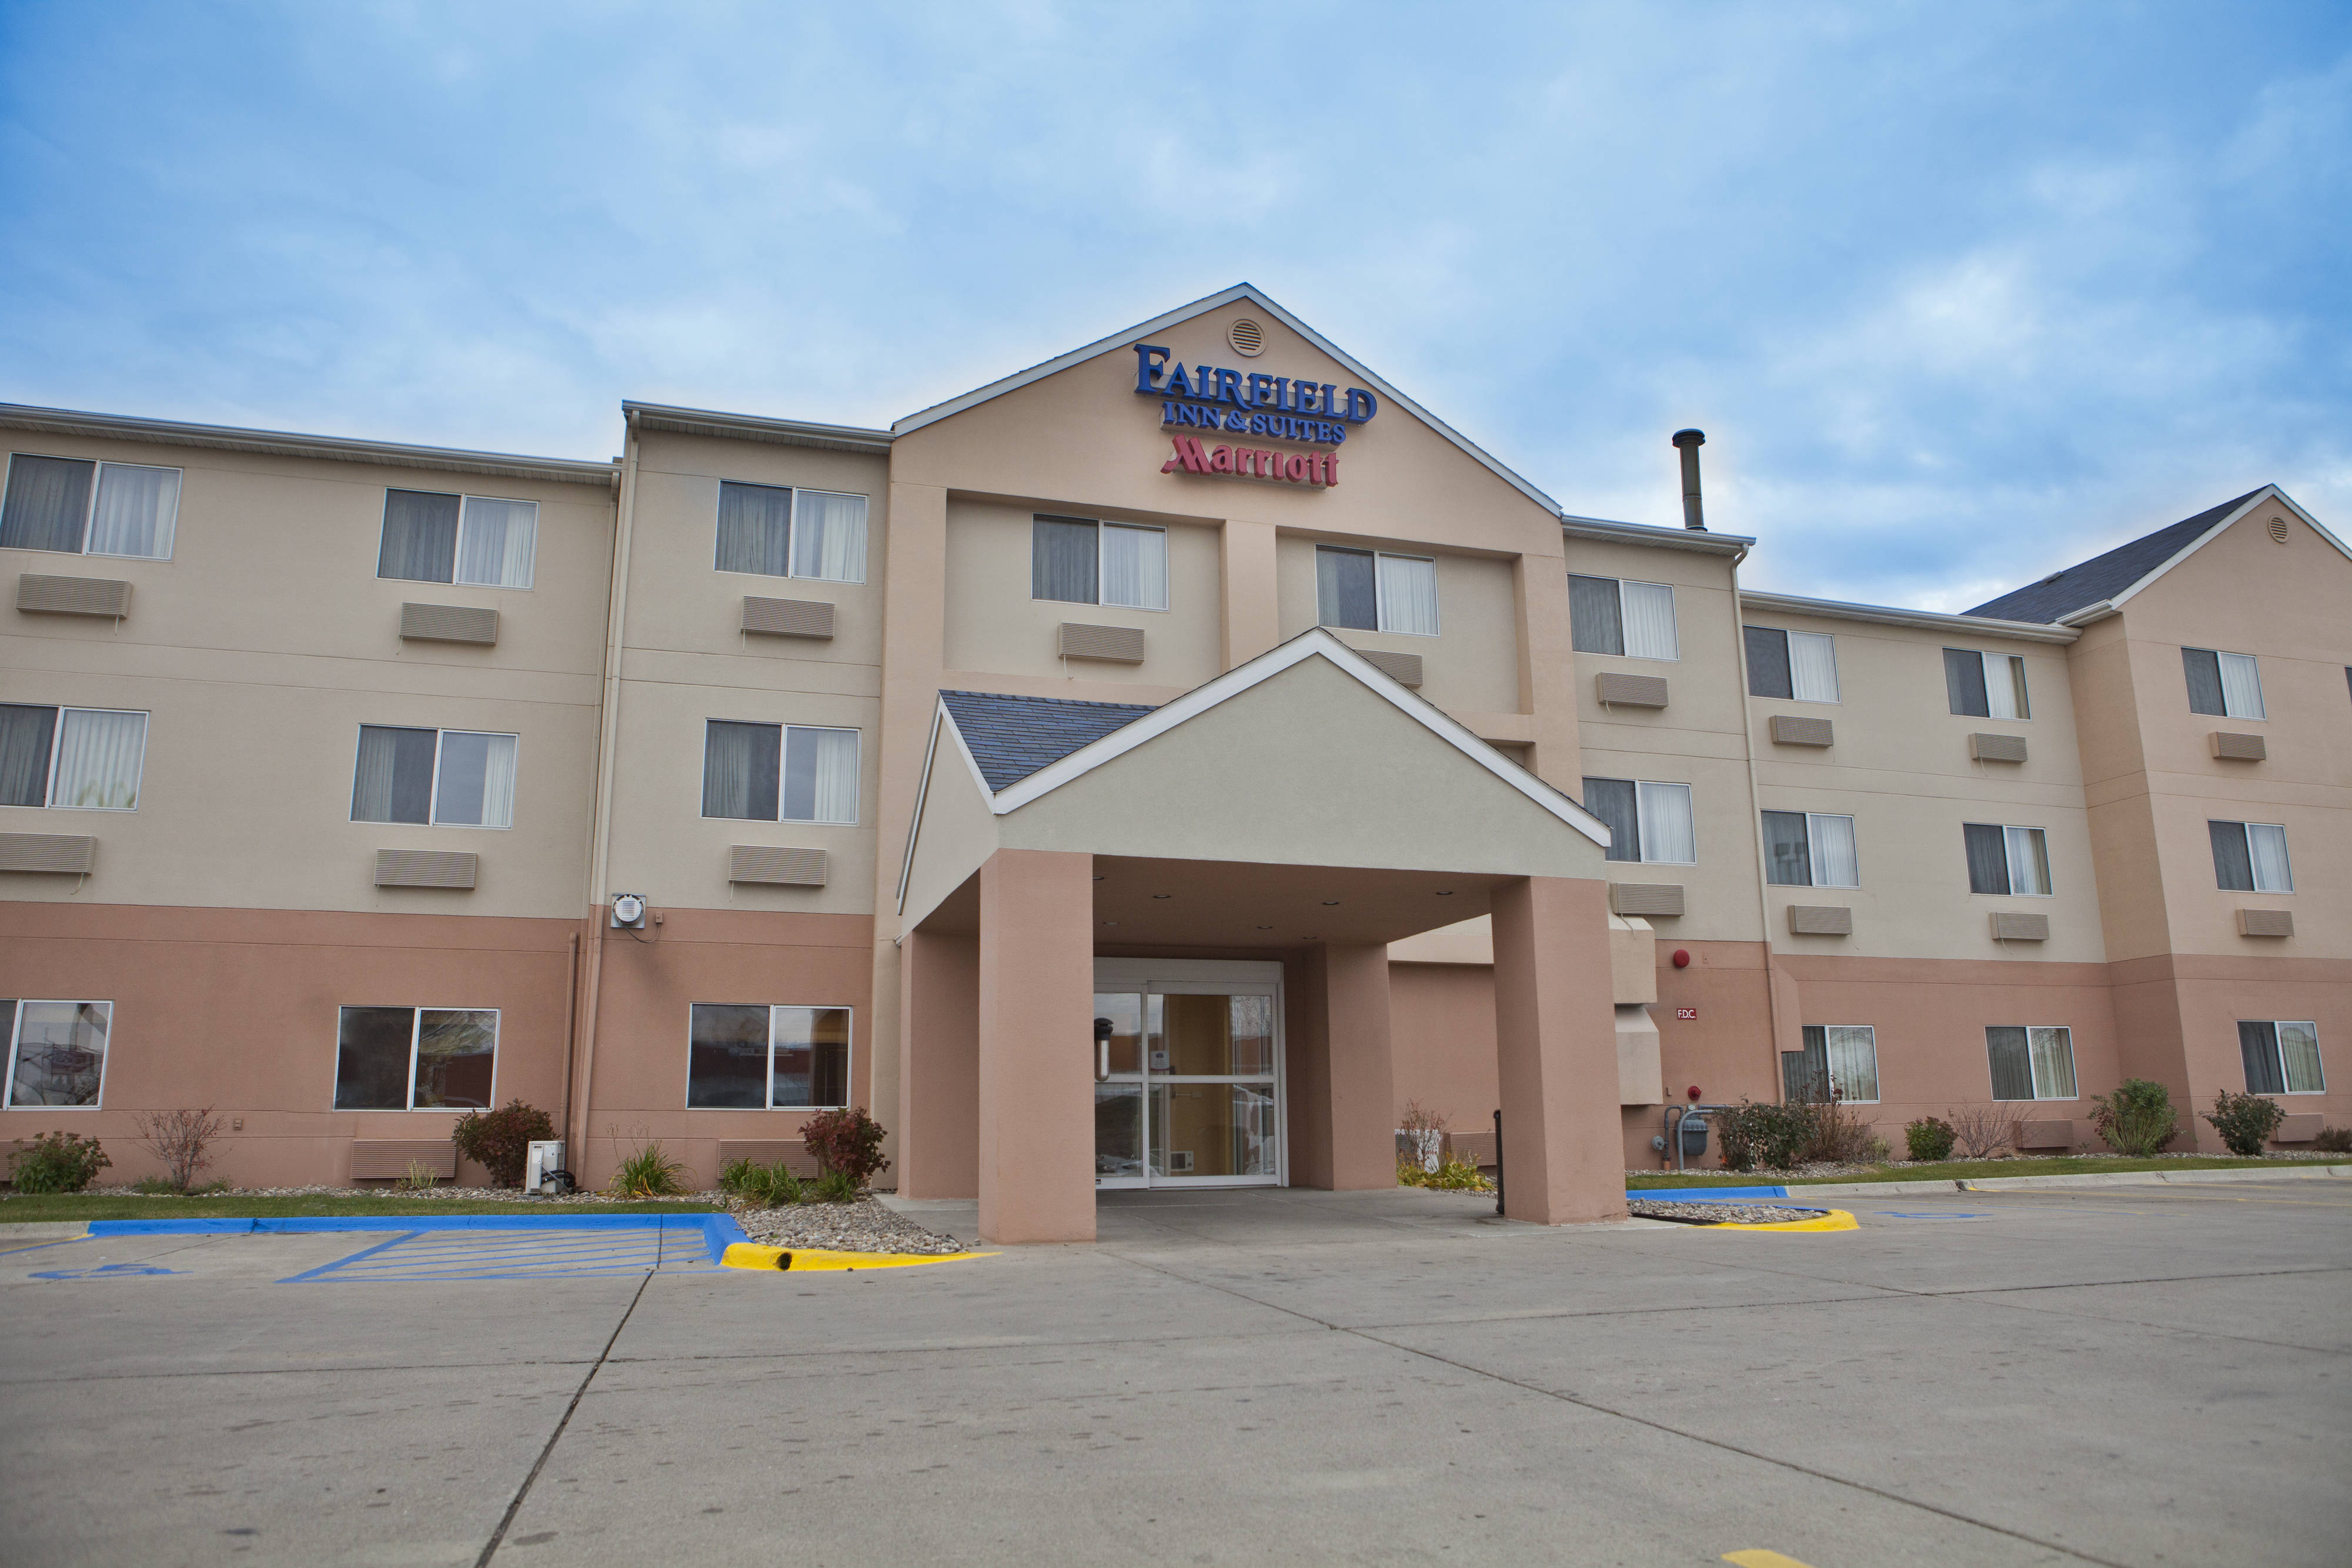 Photo of Fairfield Inn & Suites by Marriott Bismarck South, Bismarck, ND